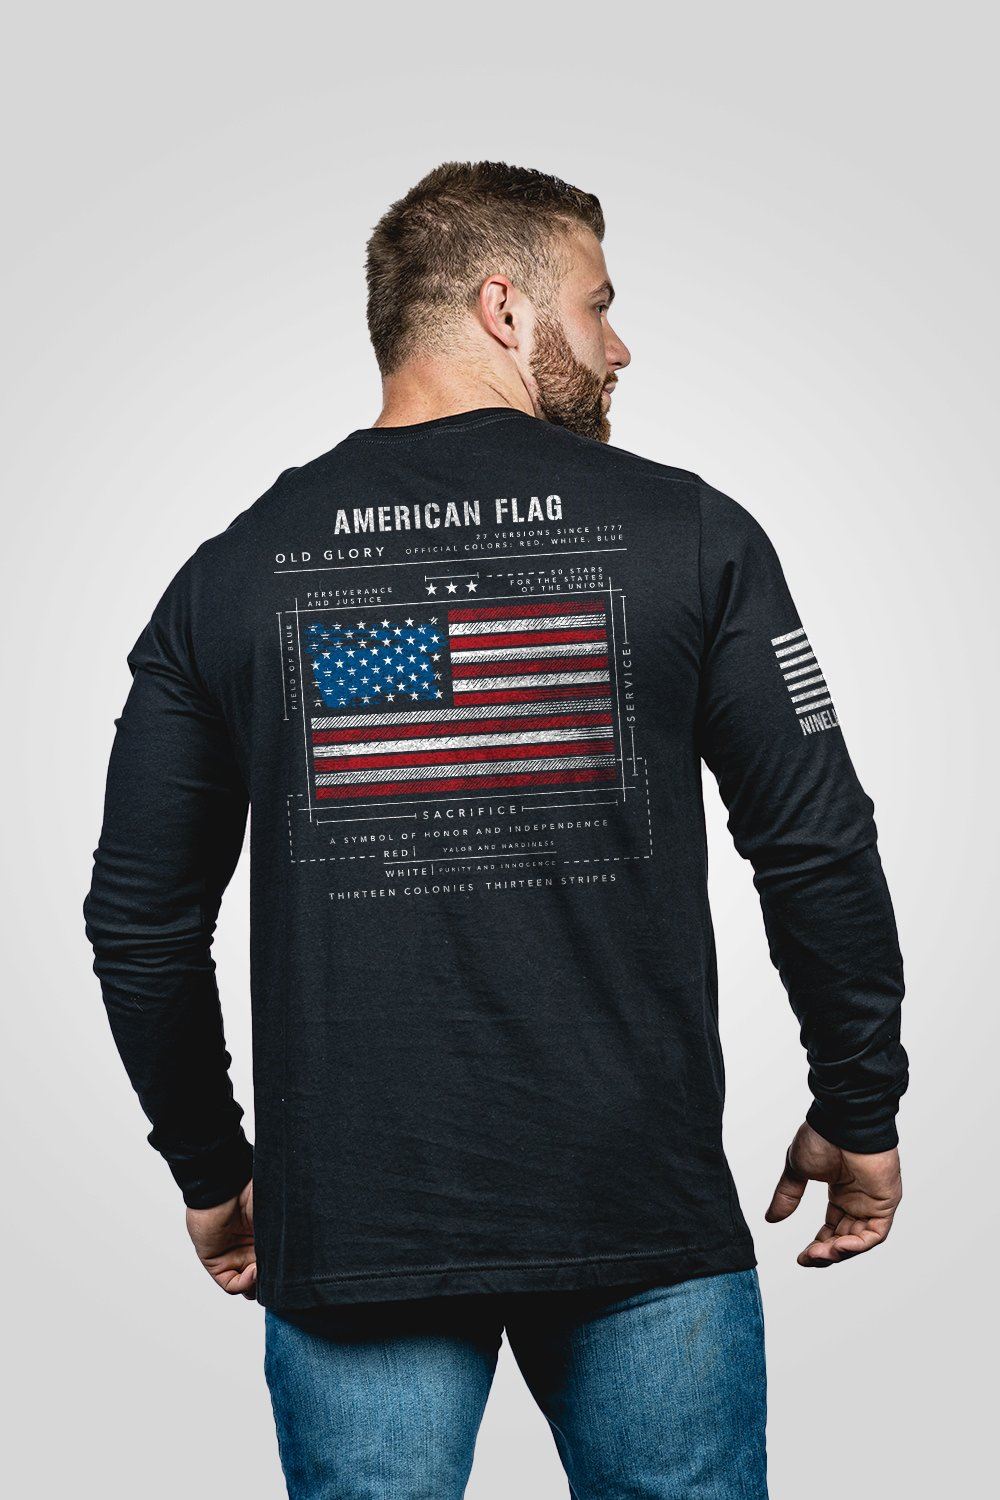 Nine Line American Flag Schematic Long Sleeve - Black - L